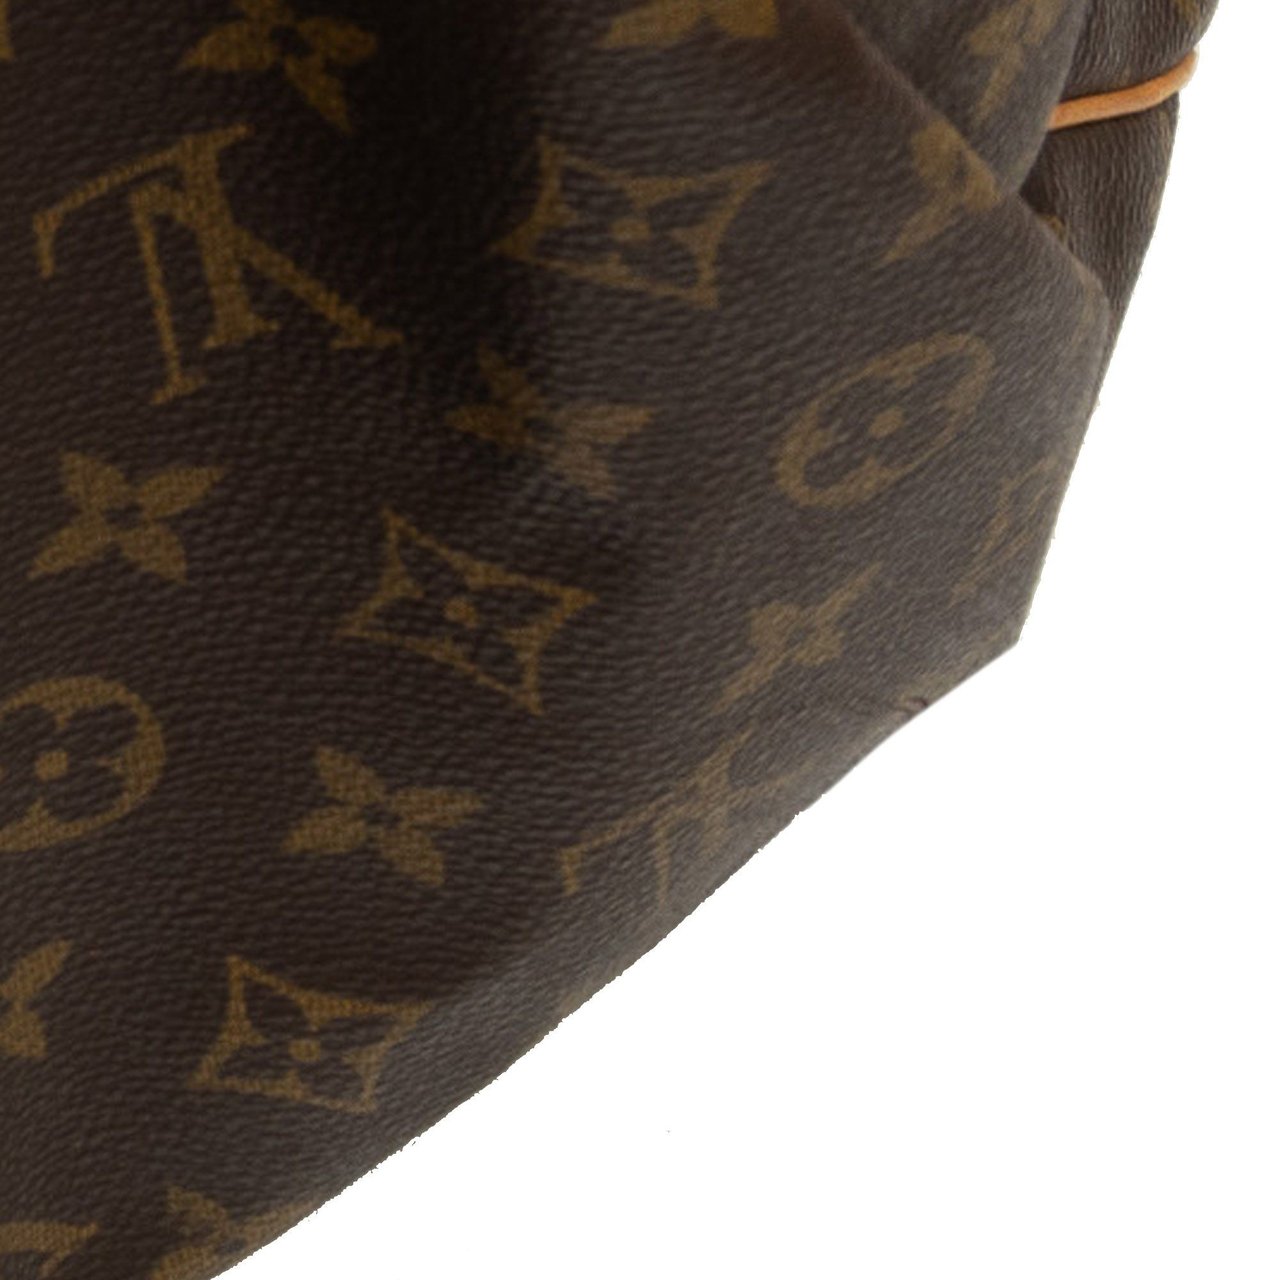 Louis Vuitton Monogram Keepall 60 Bruin